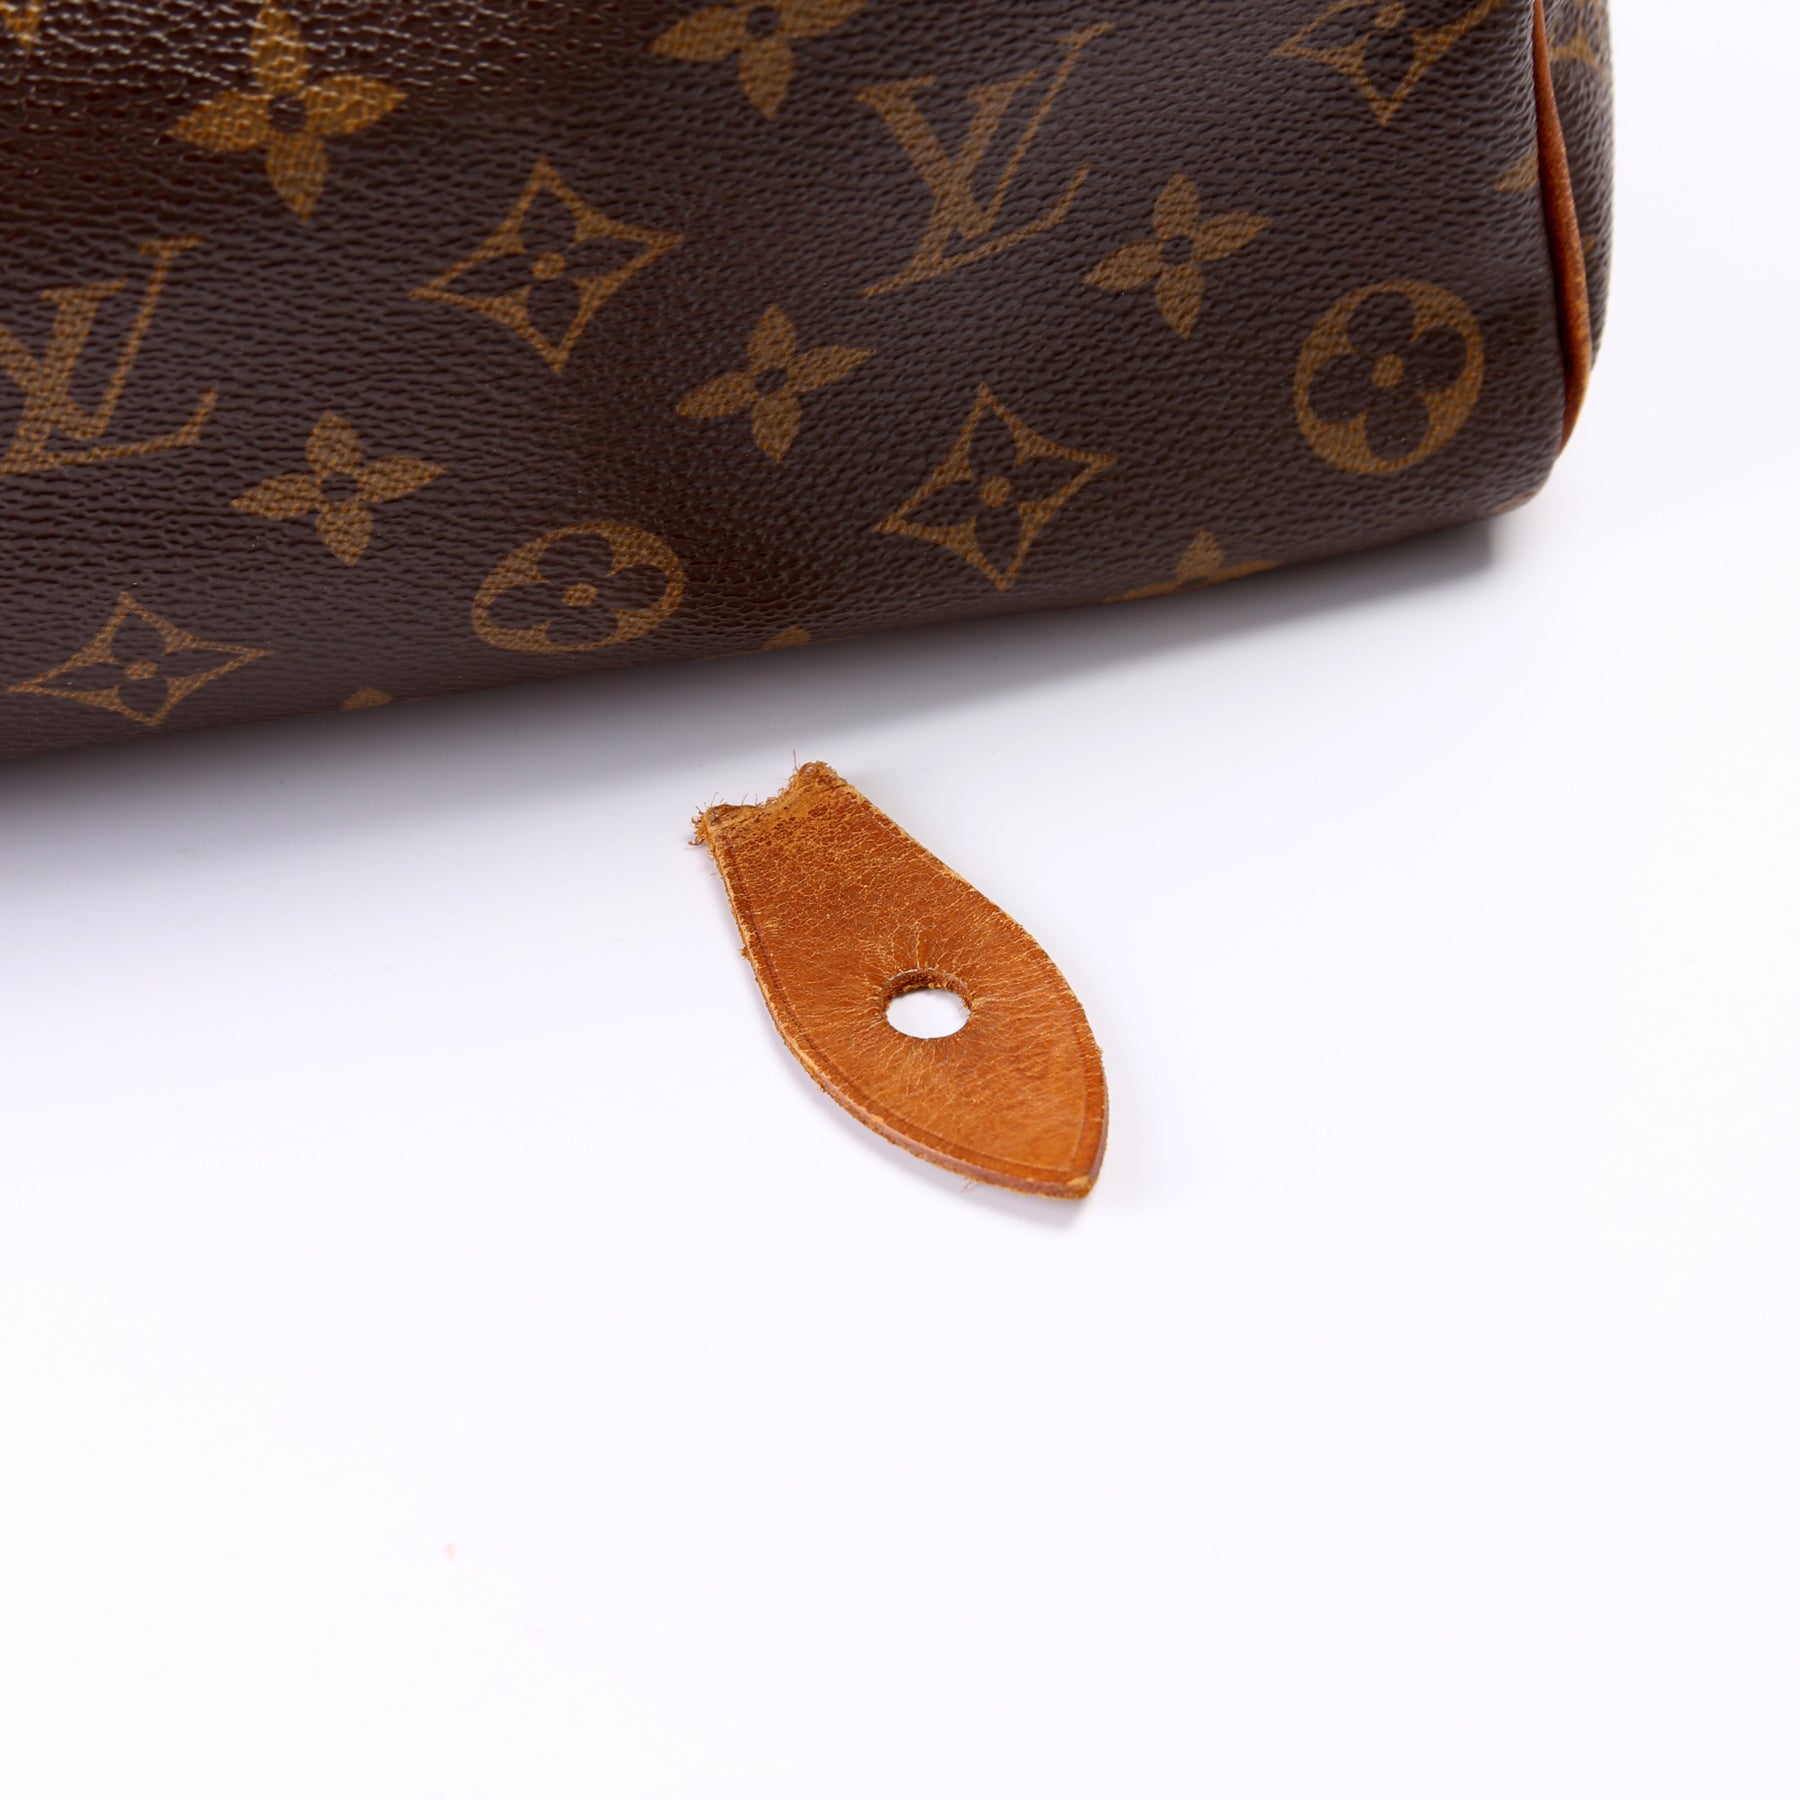 Speedy 35 Bandouliere Monogram – Keeks Designer Handbags